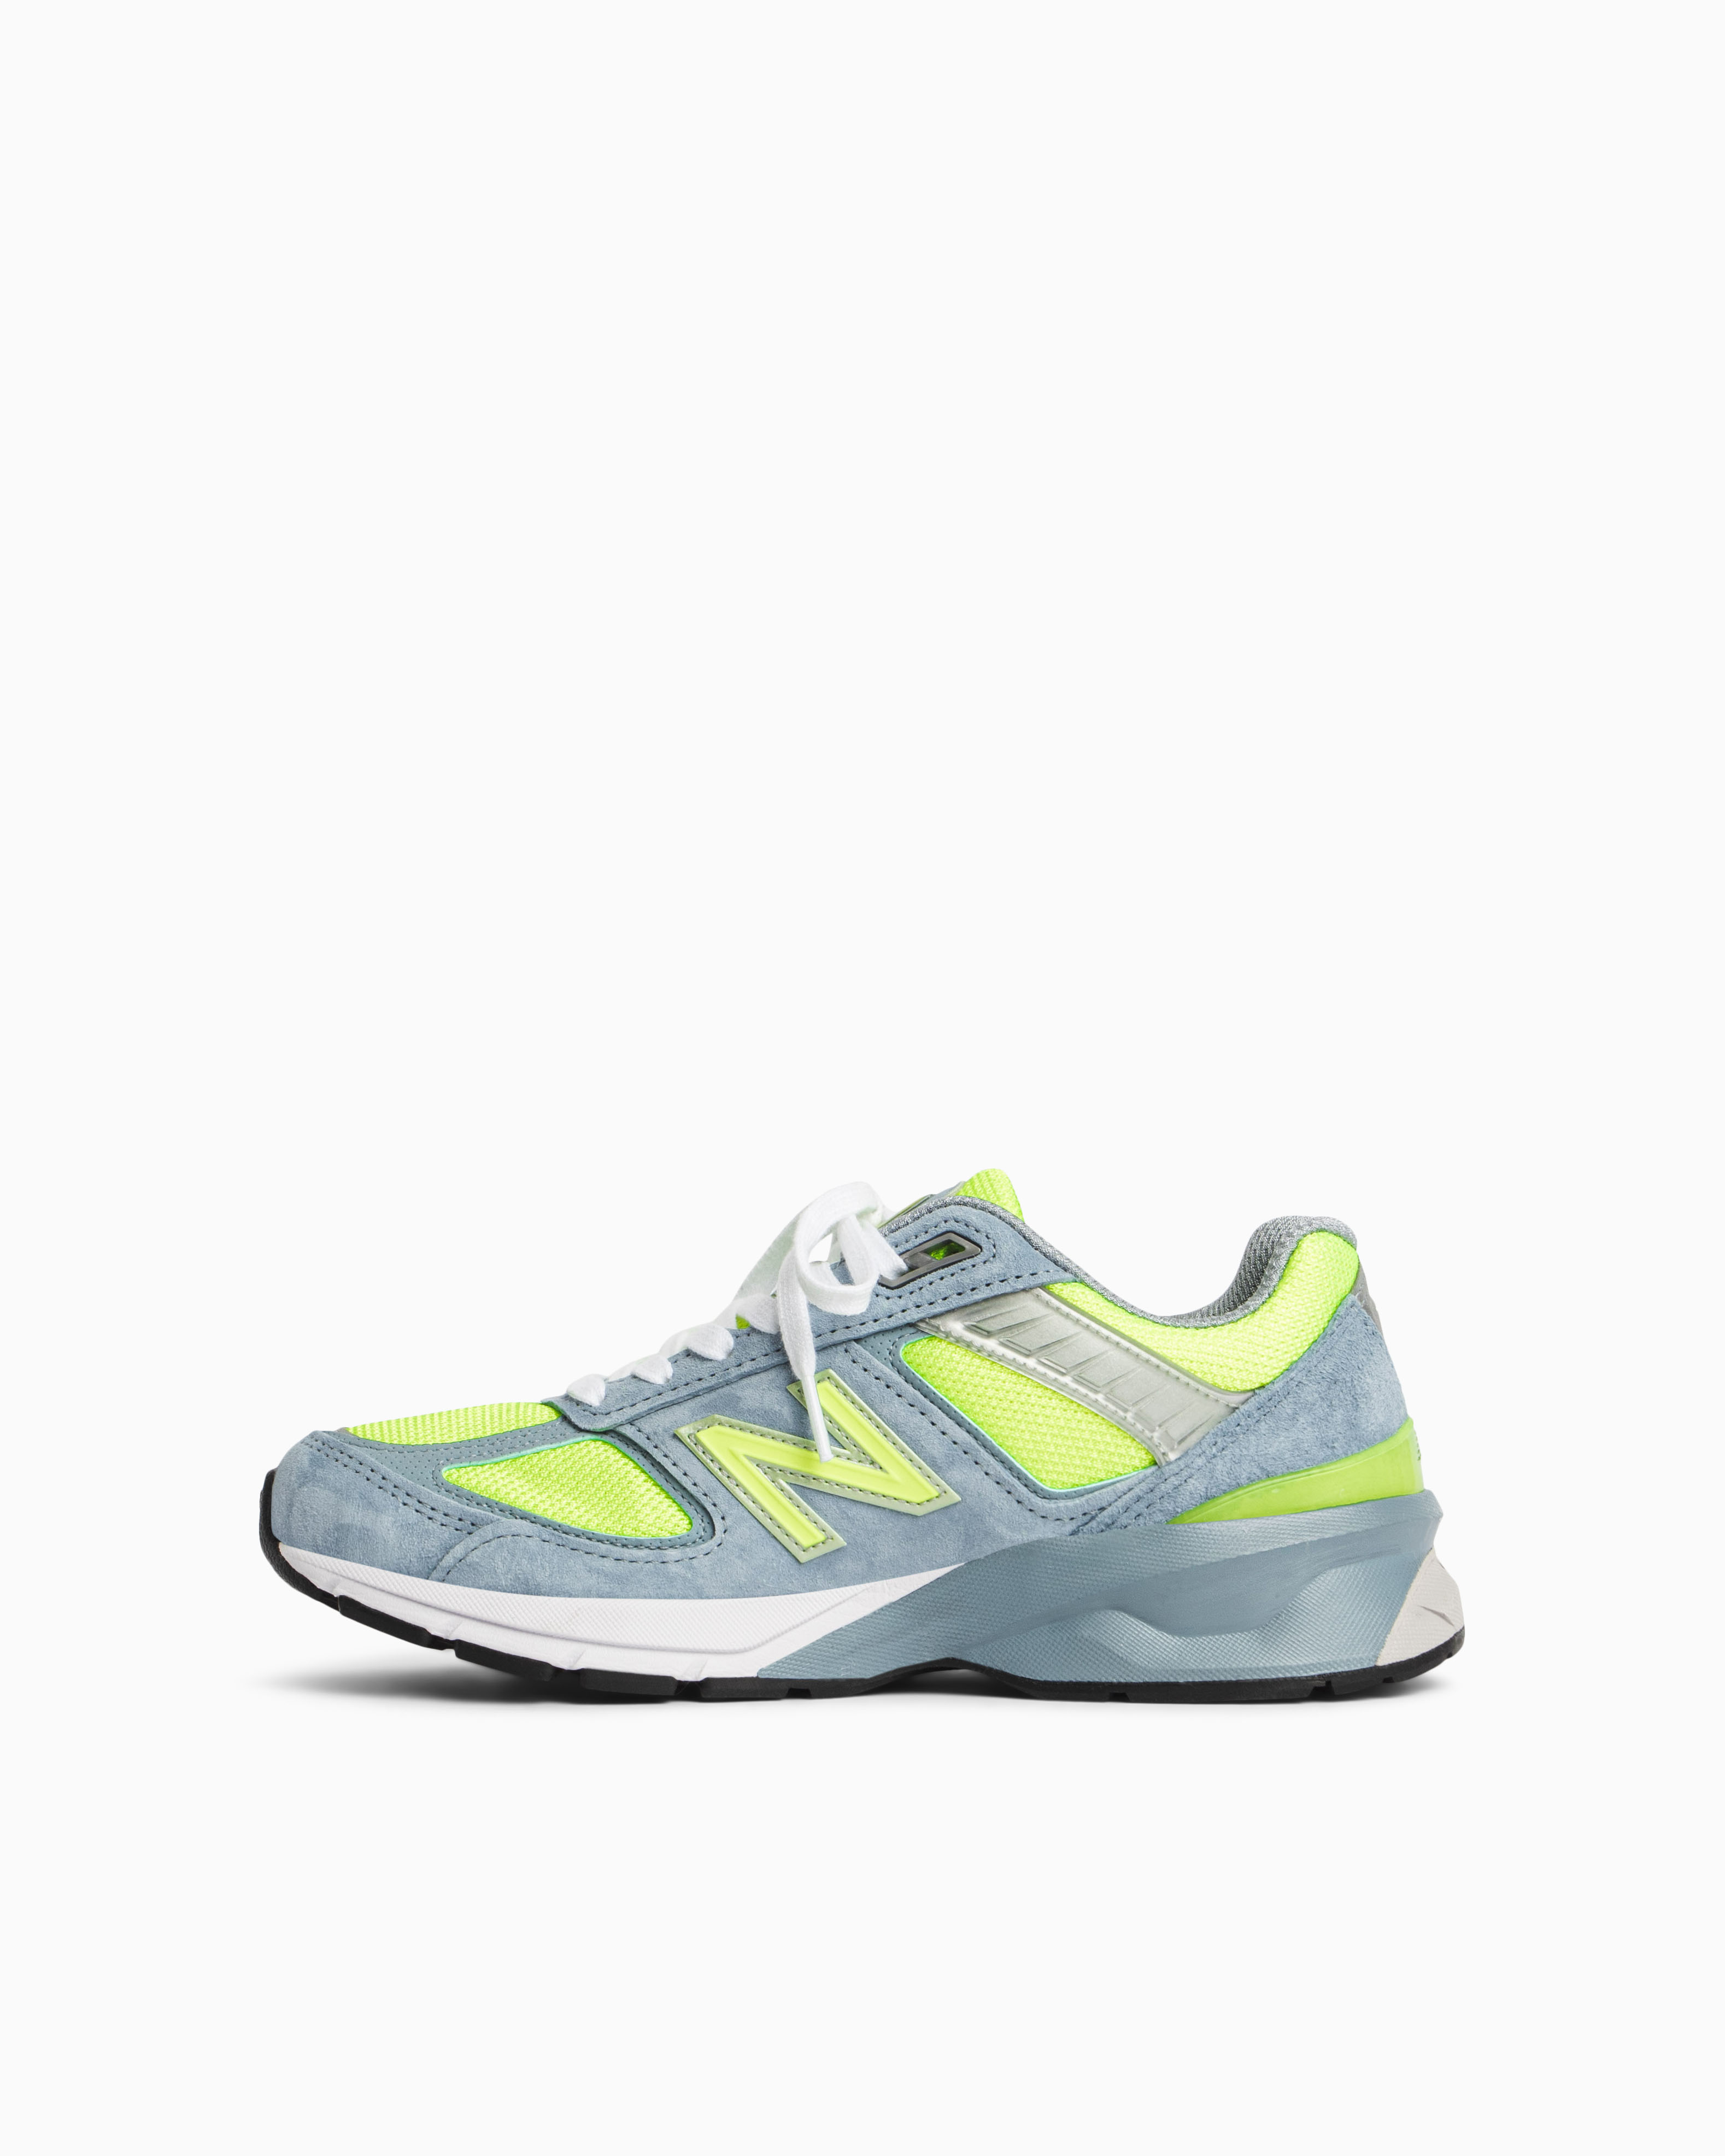 W990GH5 New Balance Footwear Sneakers Grey